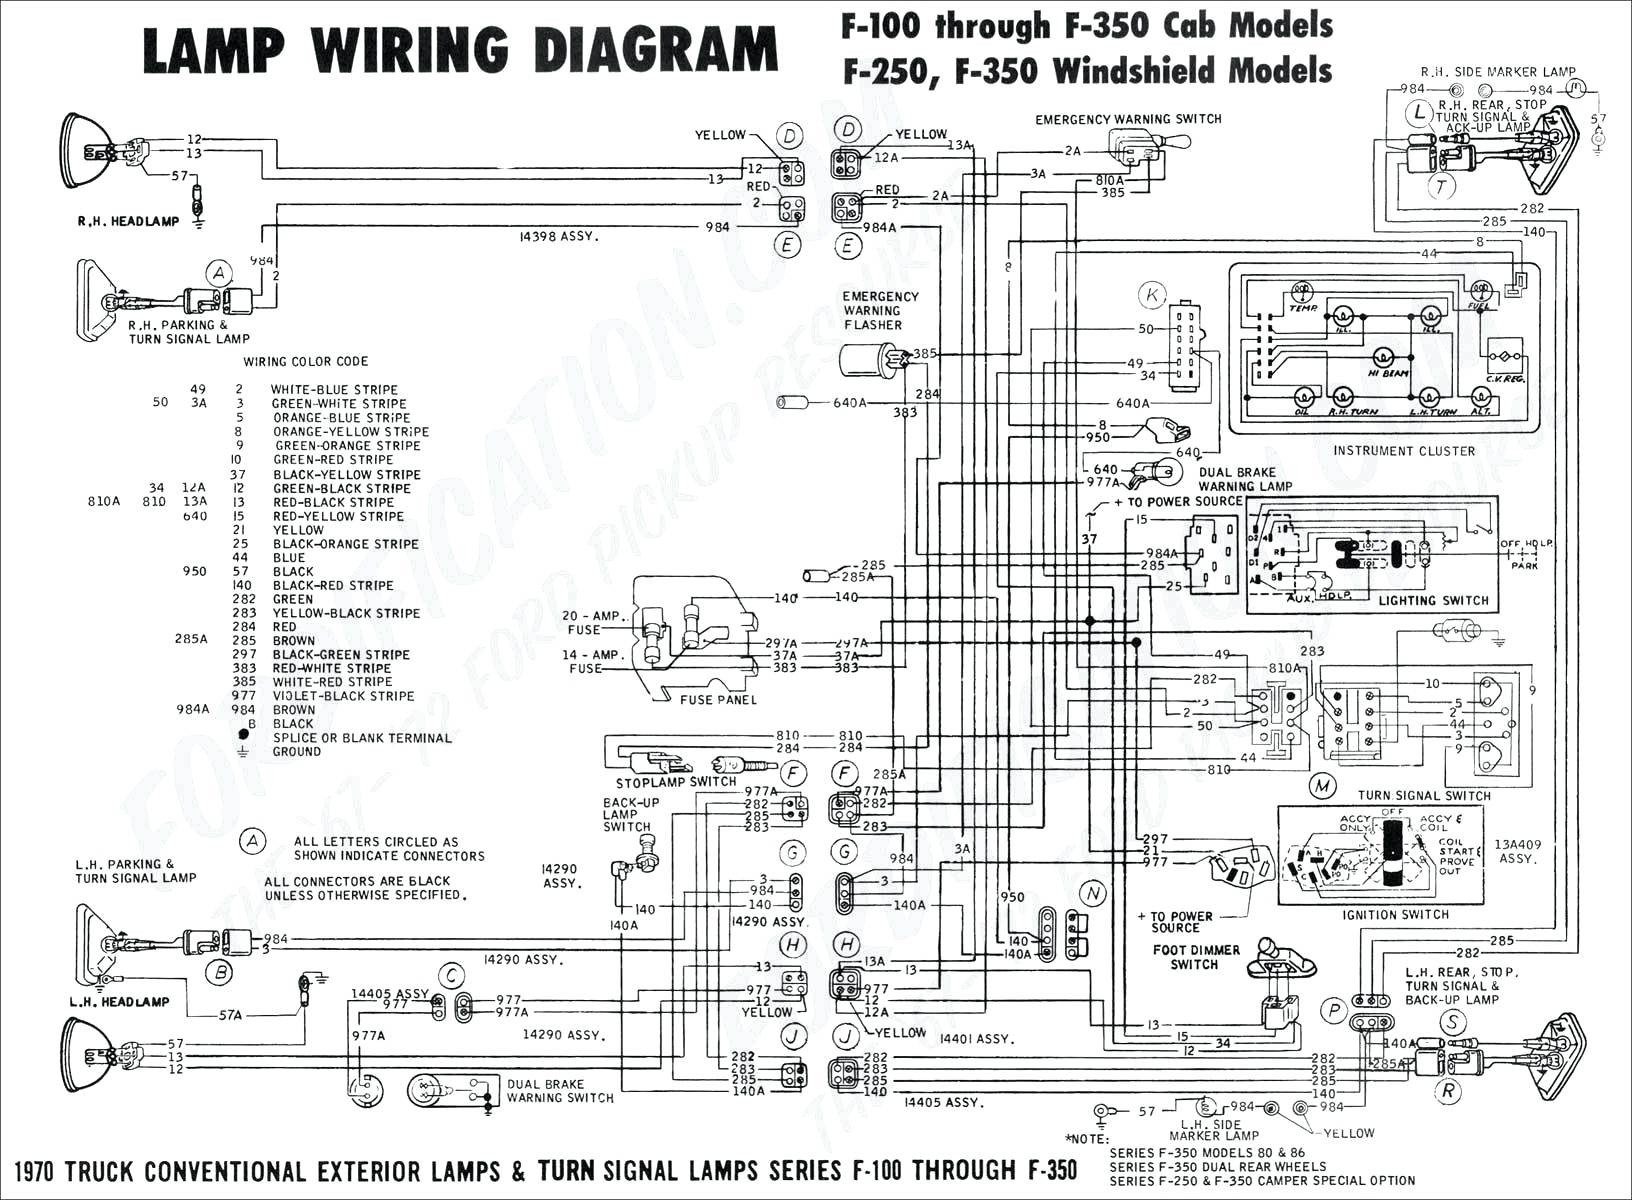 1999 Honda Accord Radio Wiring Diagram Simple Also Honda Civic Radio Wiring Diagram Likewise 2002 Honda Civic